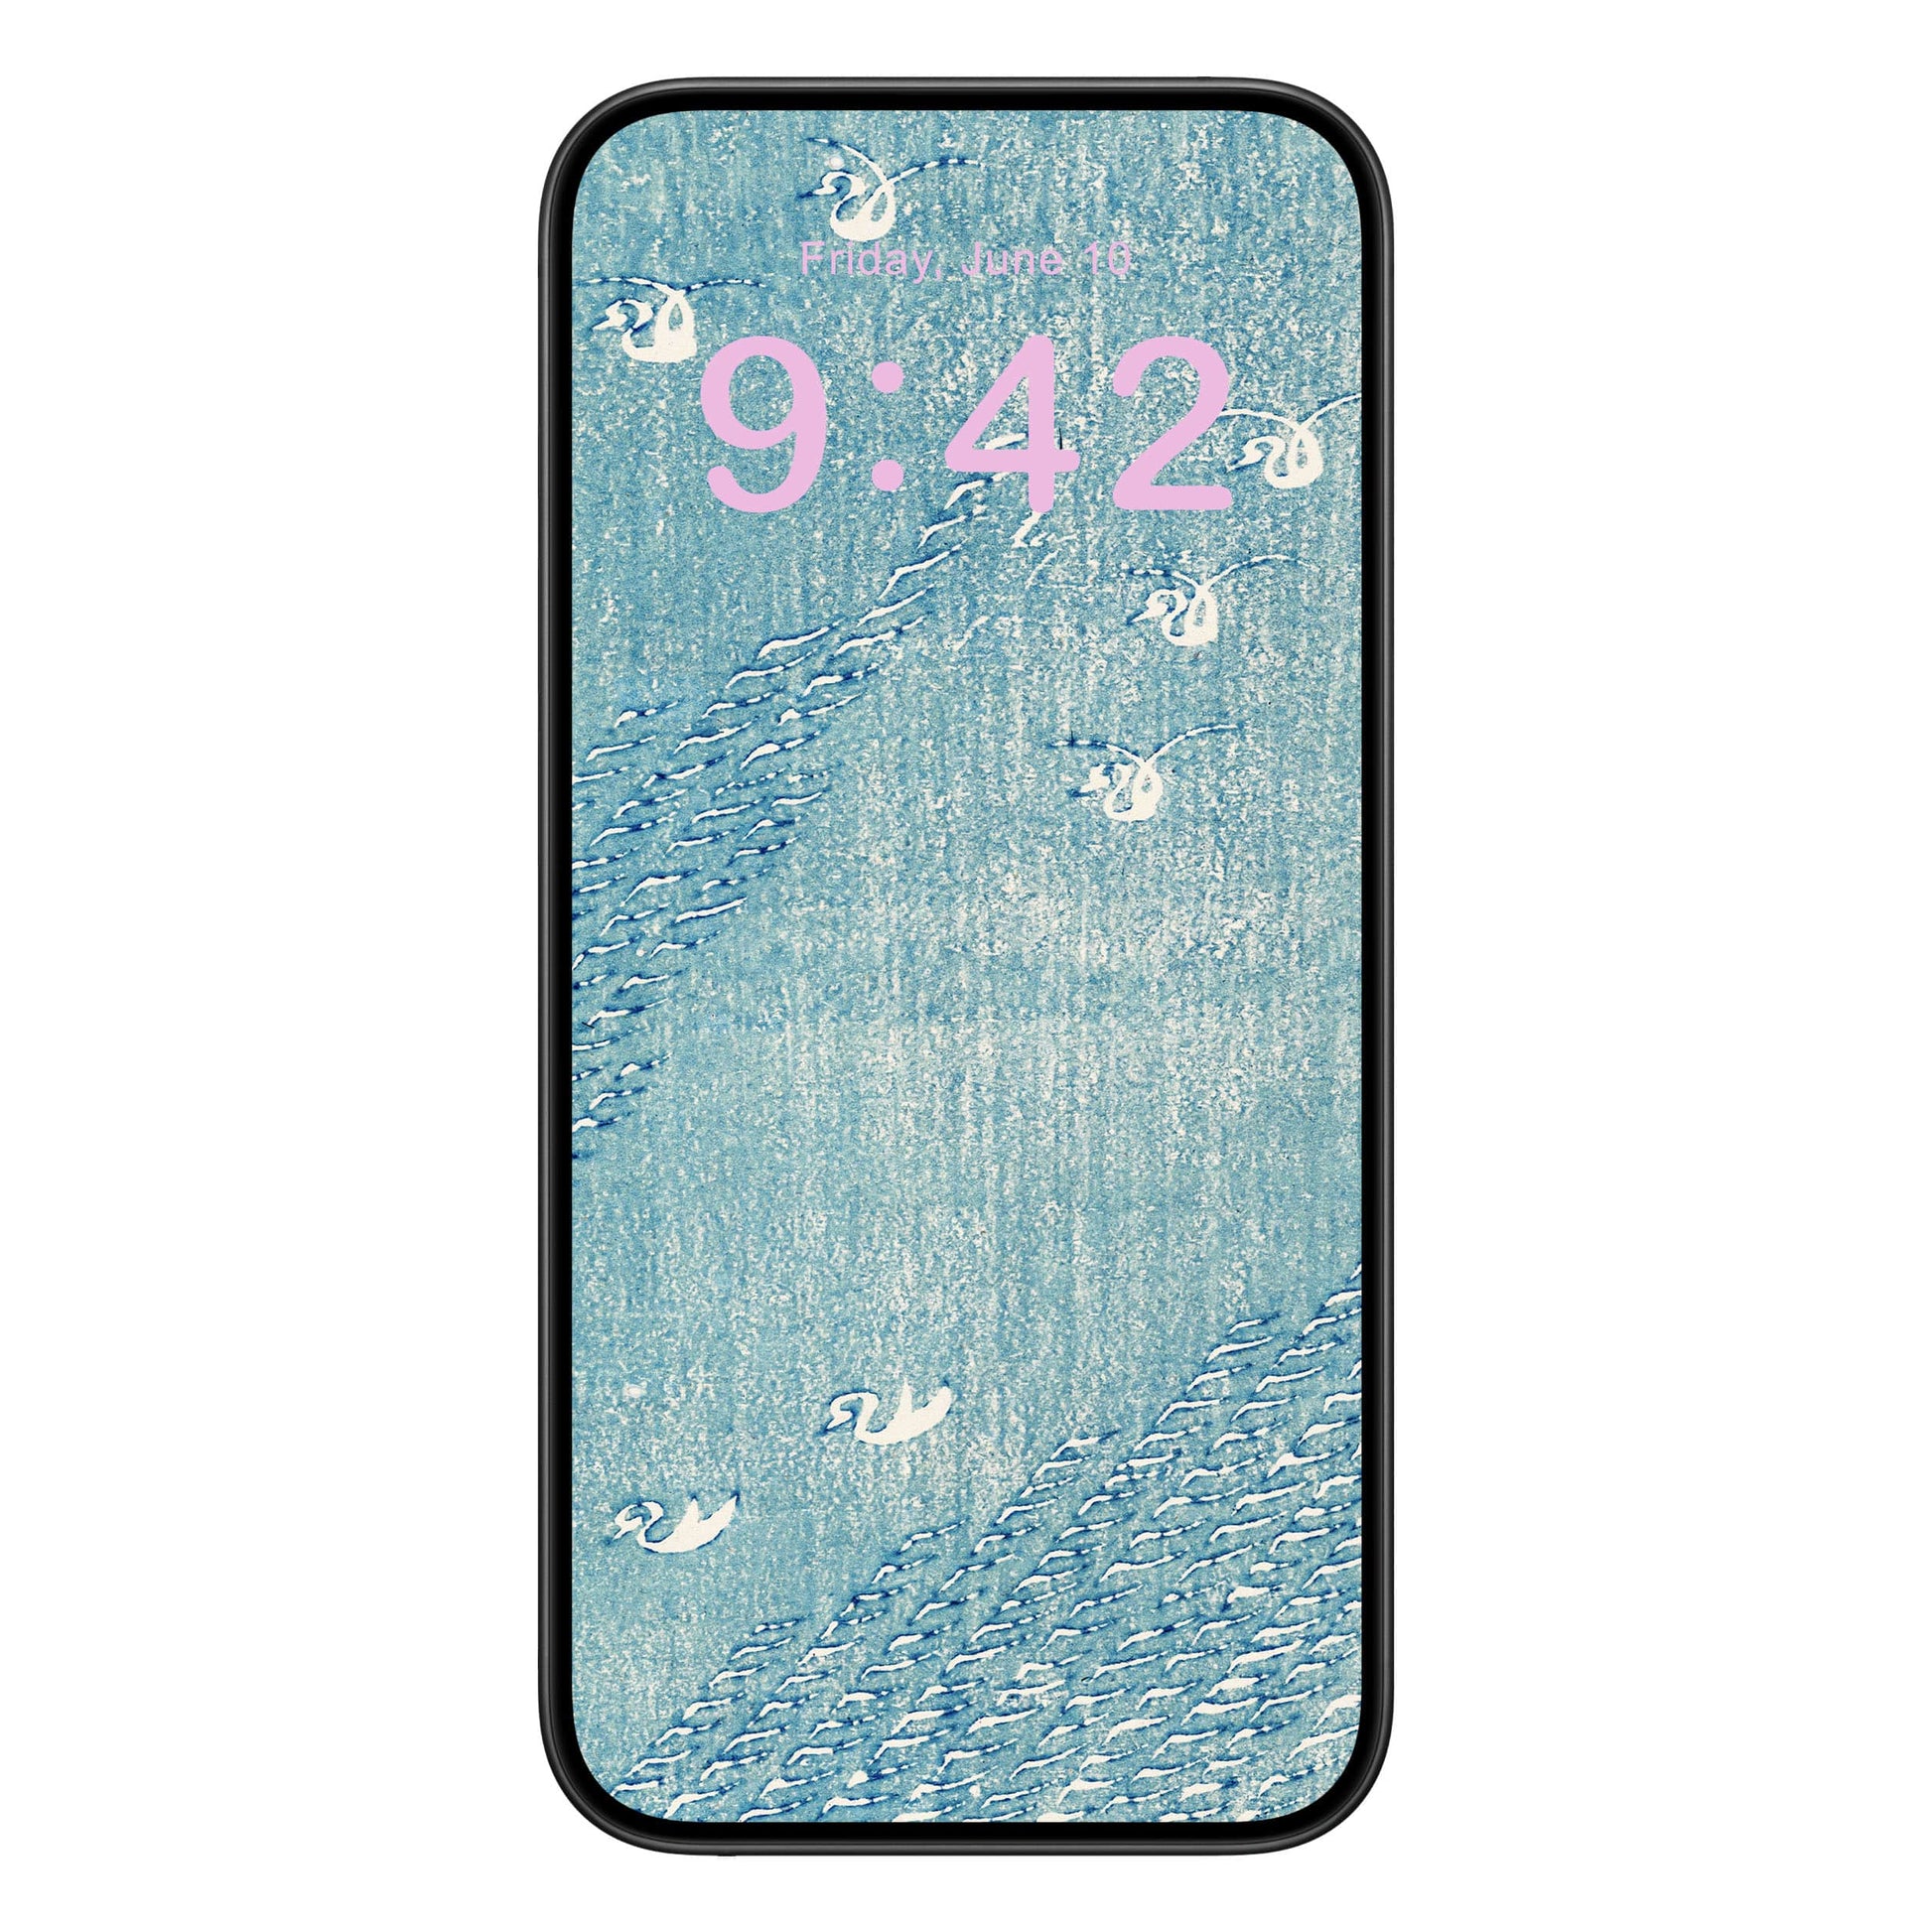 Light Blue Minimalist Phone Wallpaper Pink Text